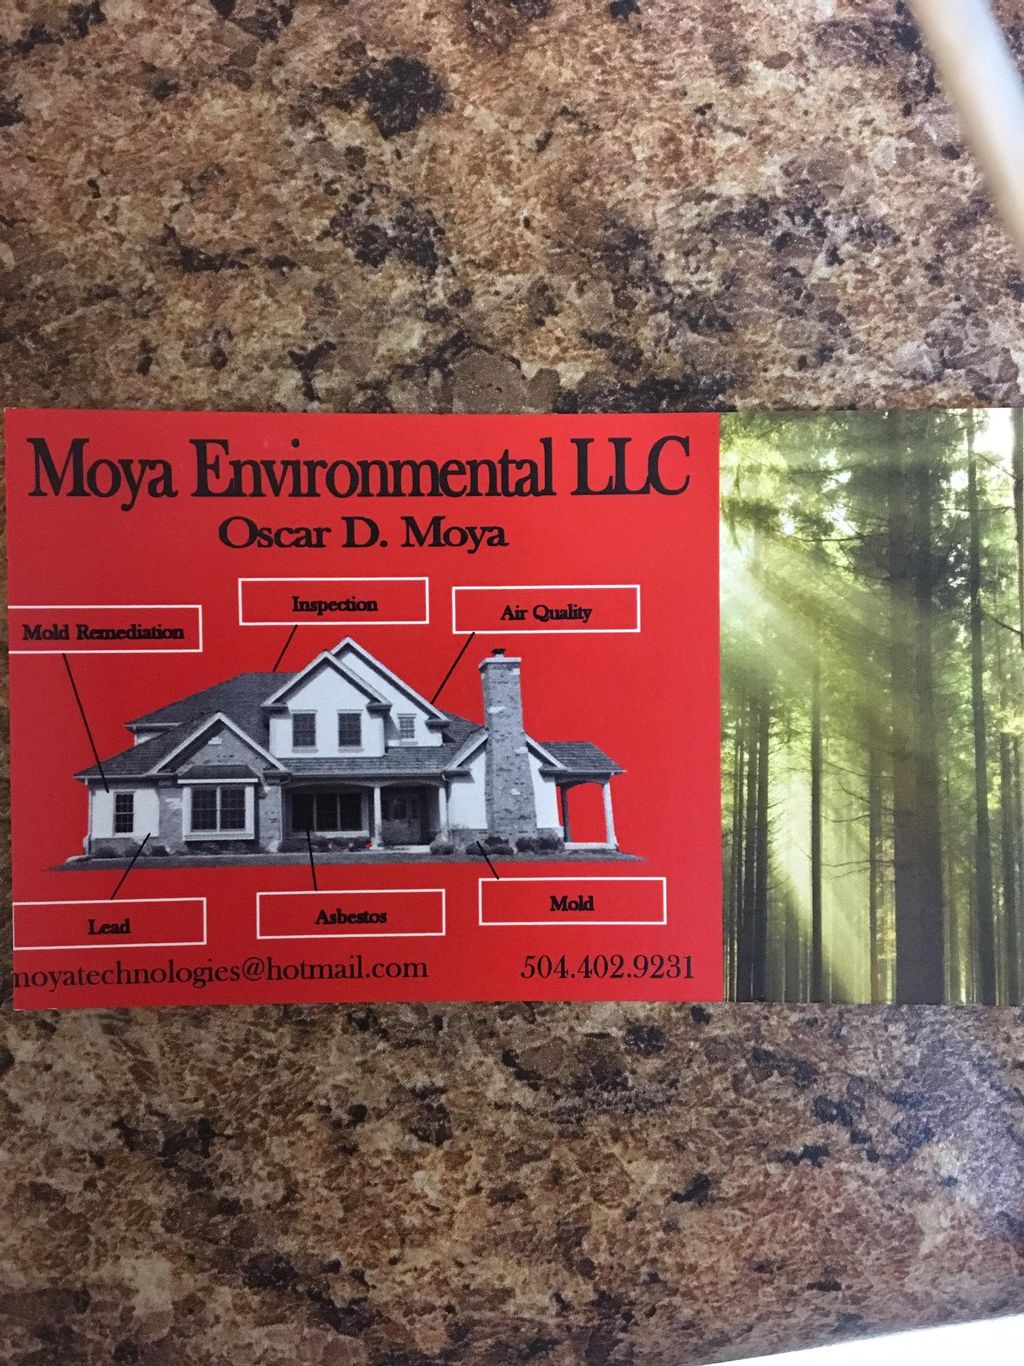 Moya Environmental LLC